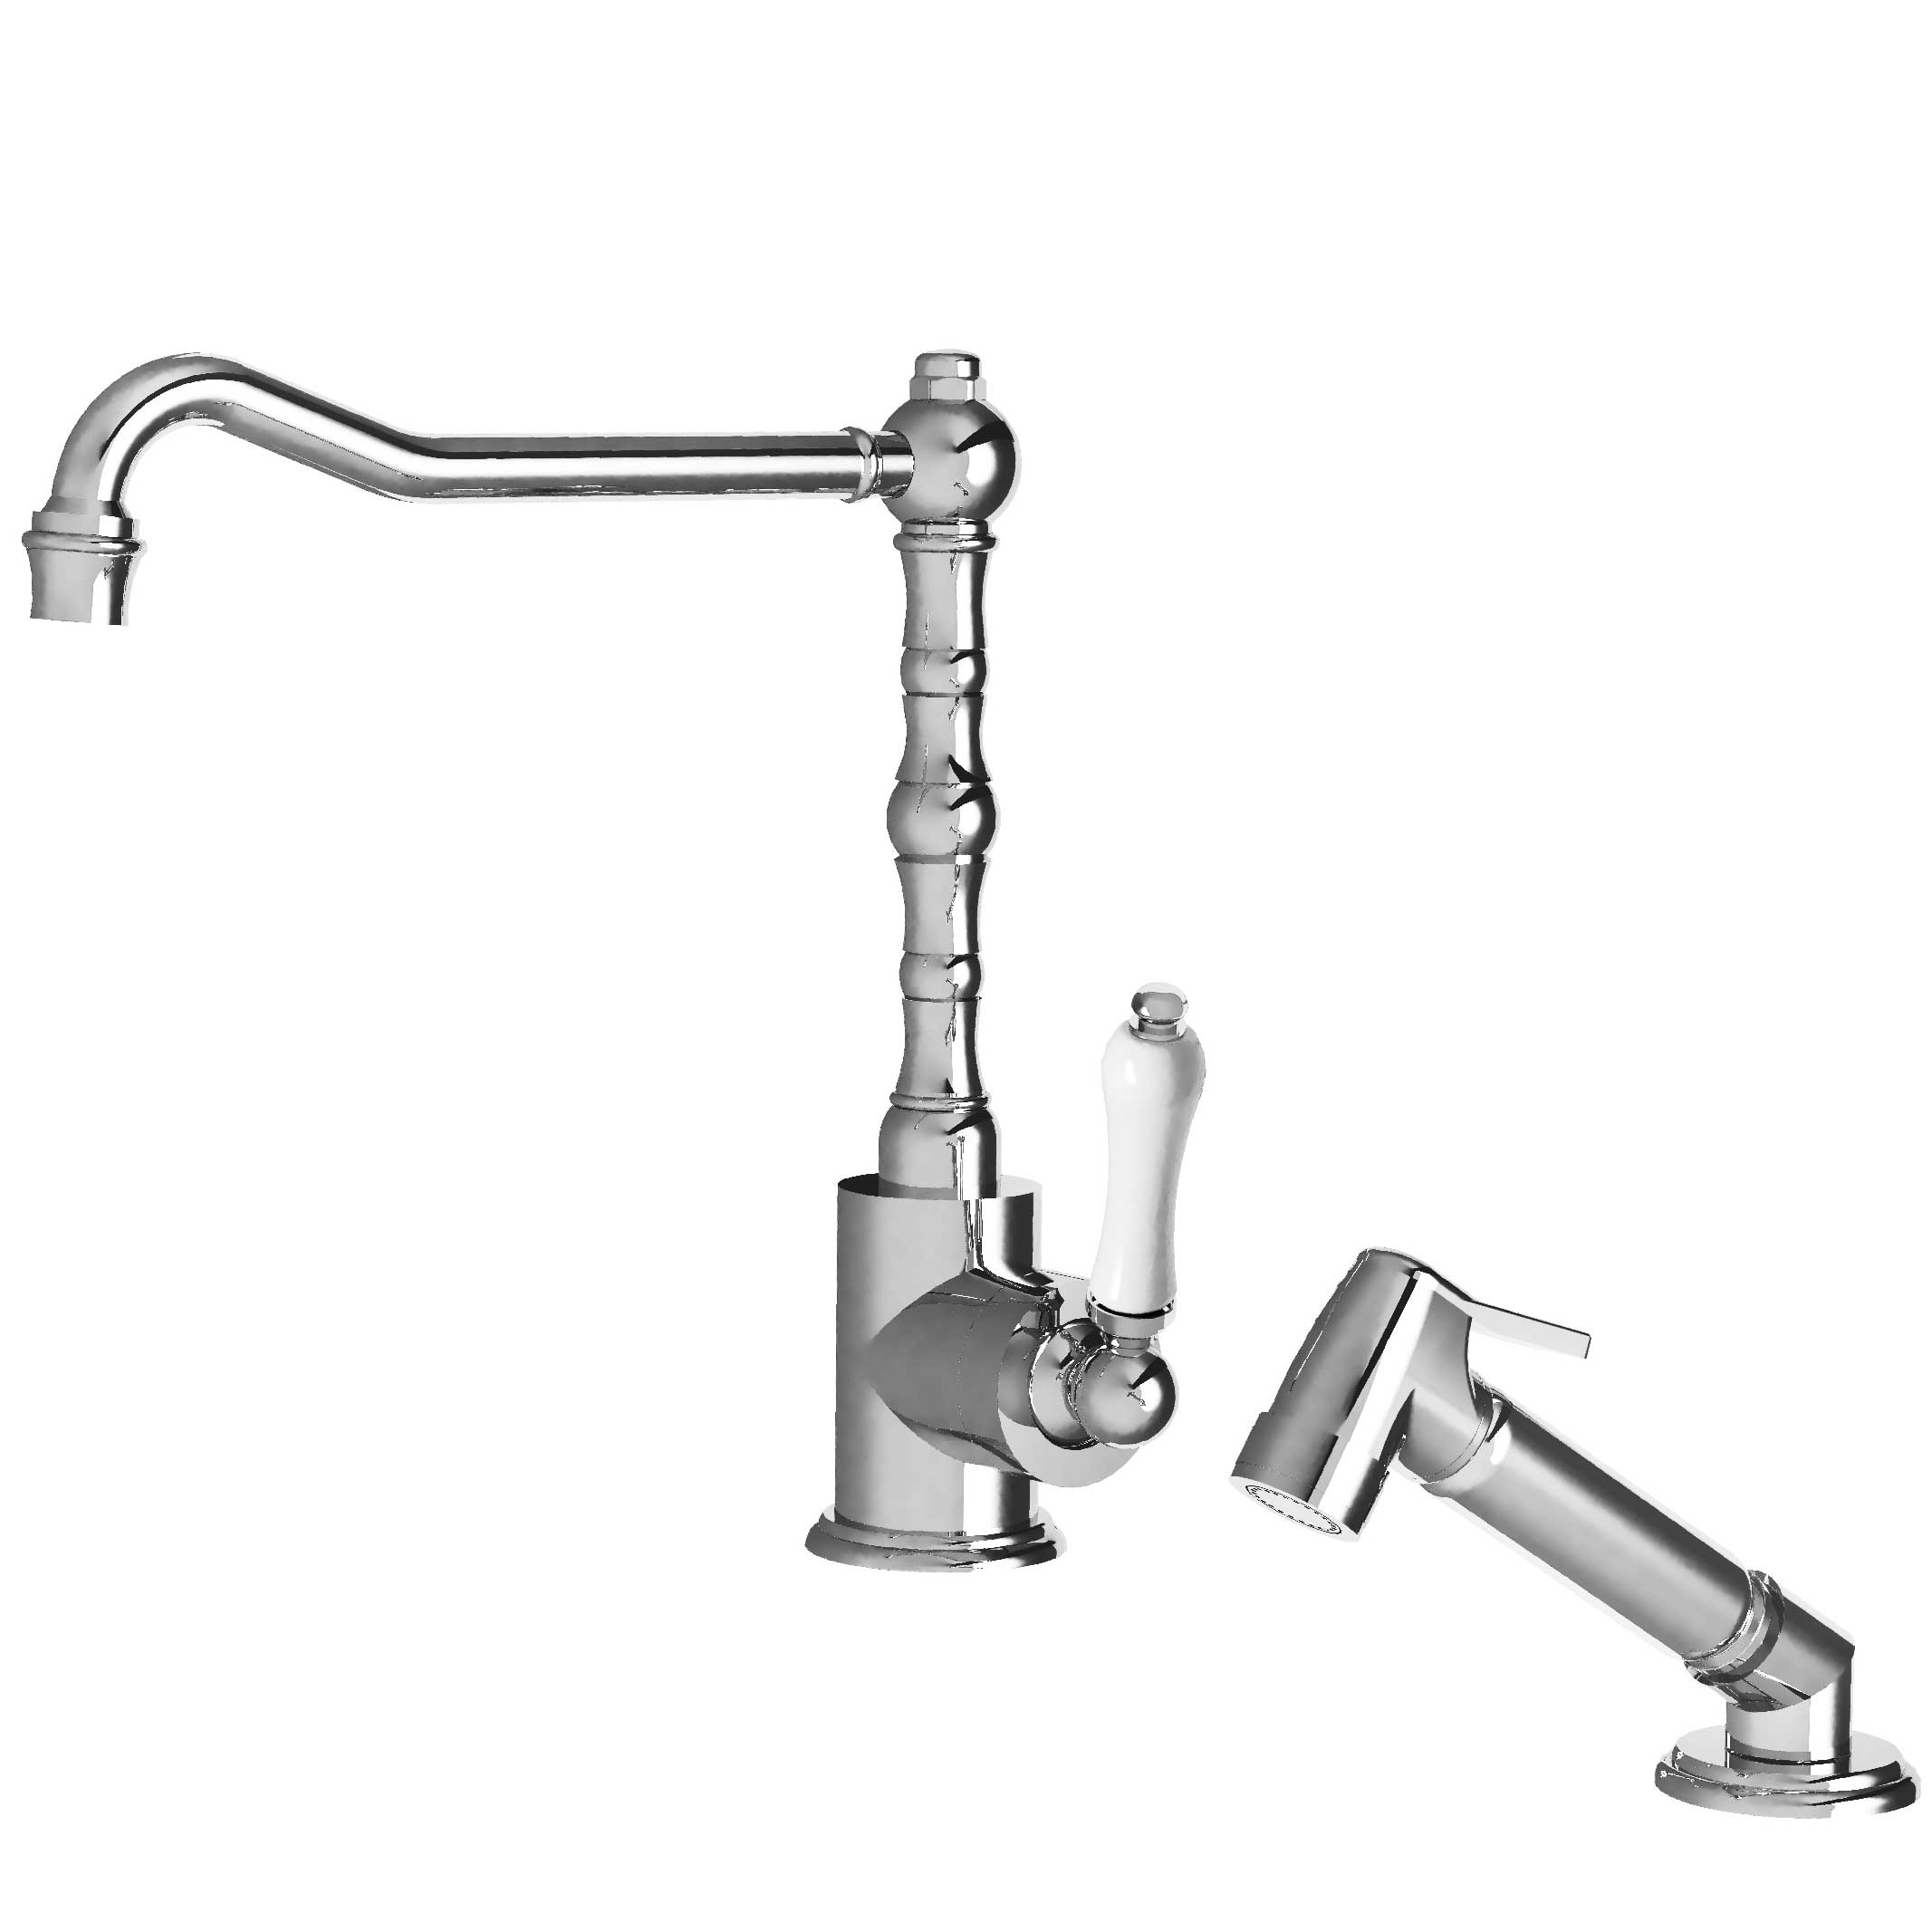 MK04-1101MBS Single-hole kitchen lever mixer & handspray